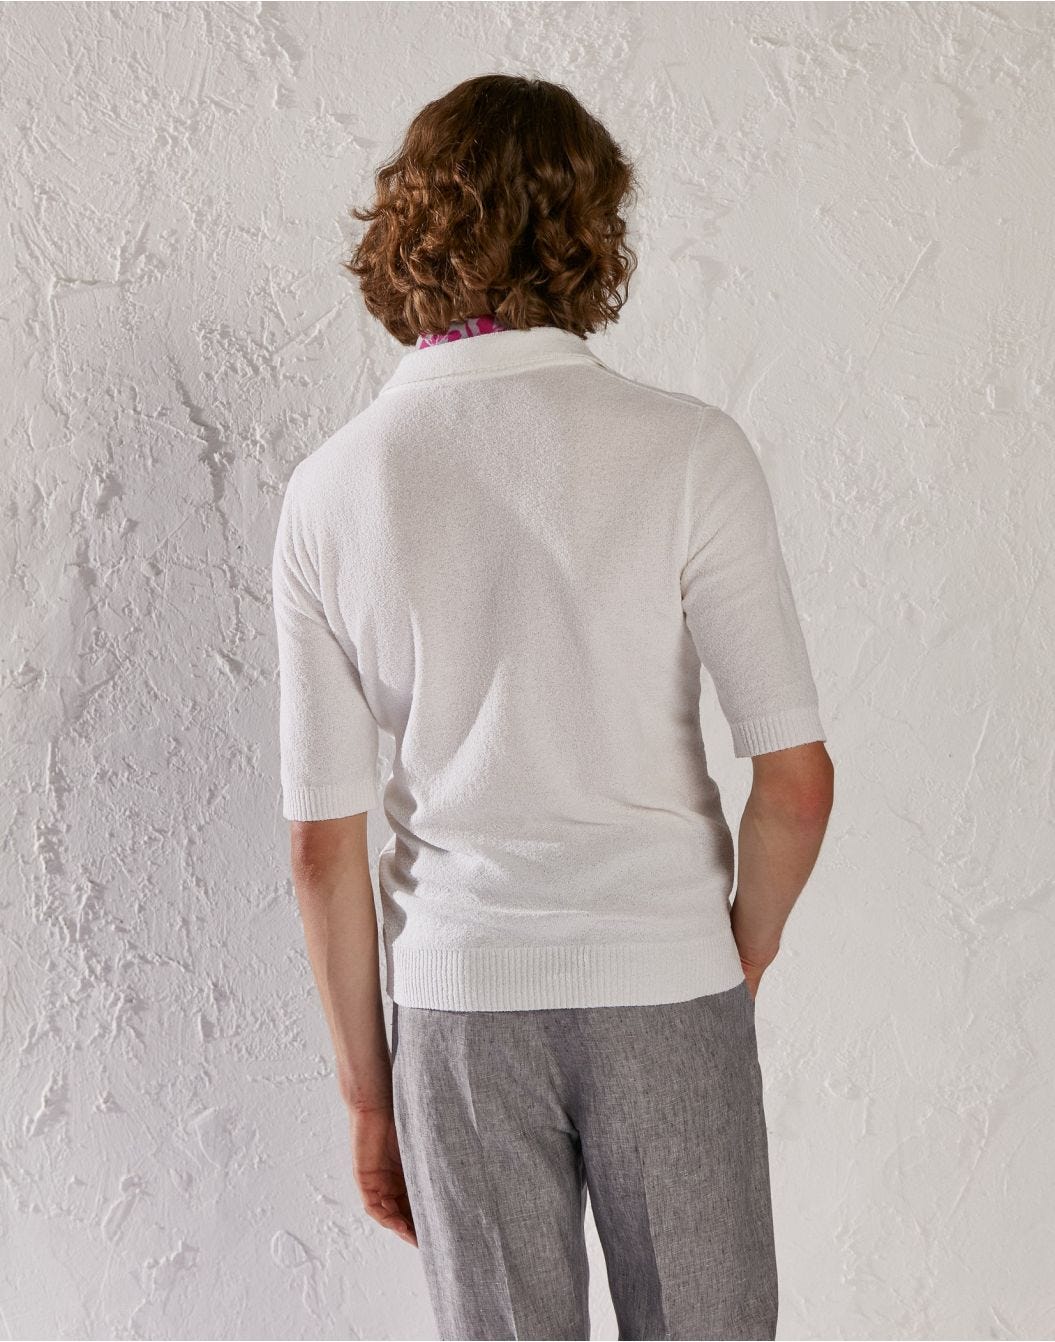 White V-neck sweater - Luigi Lardini capsule